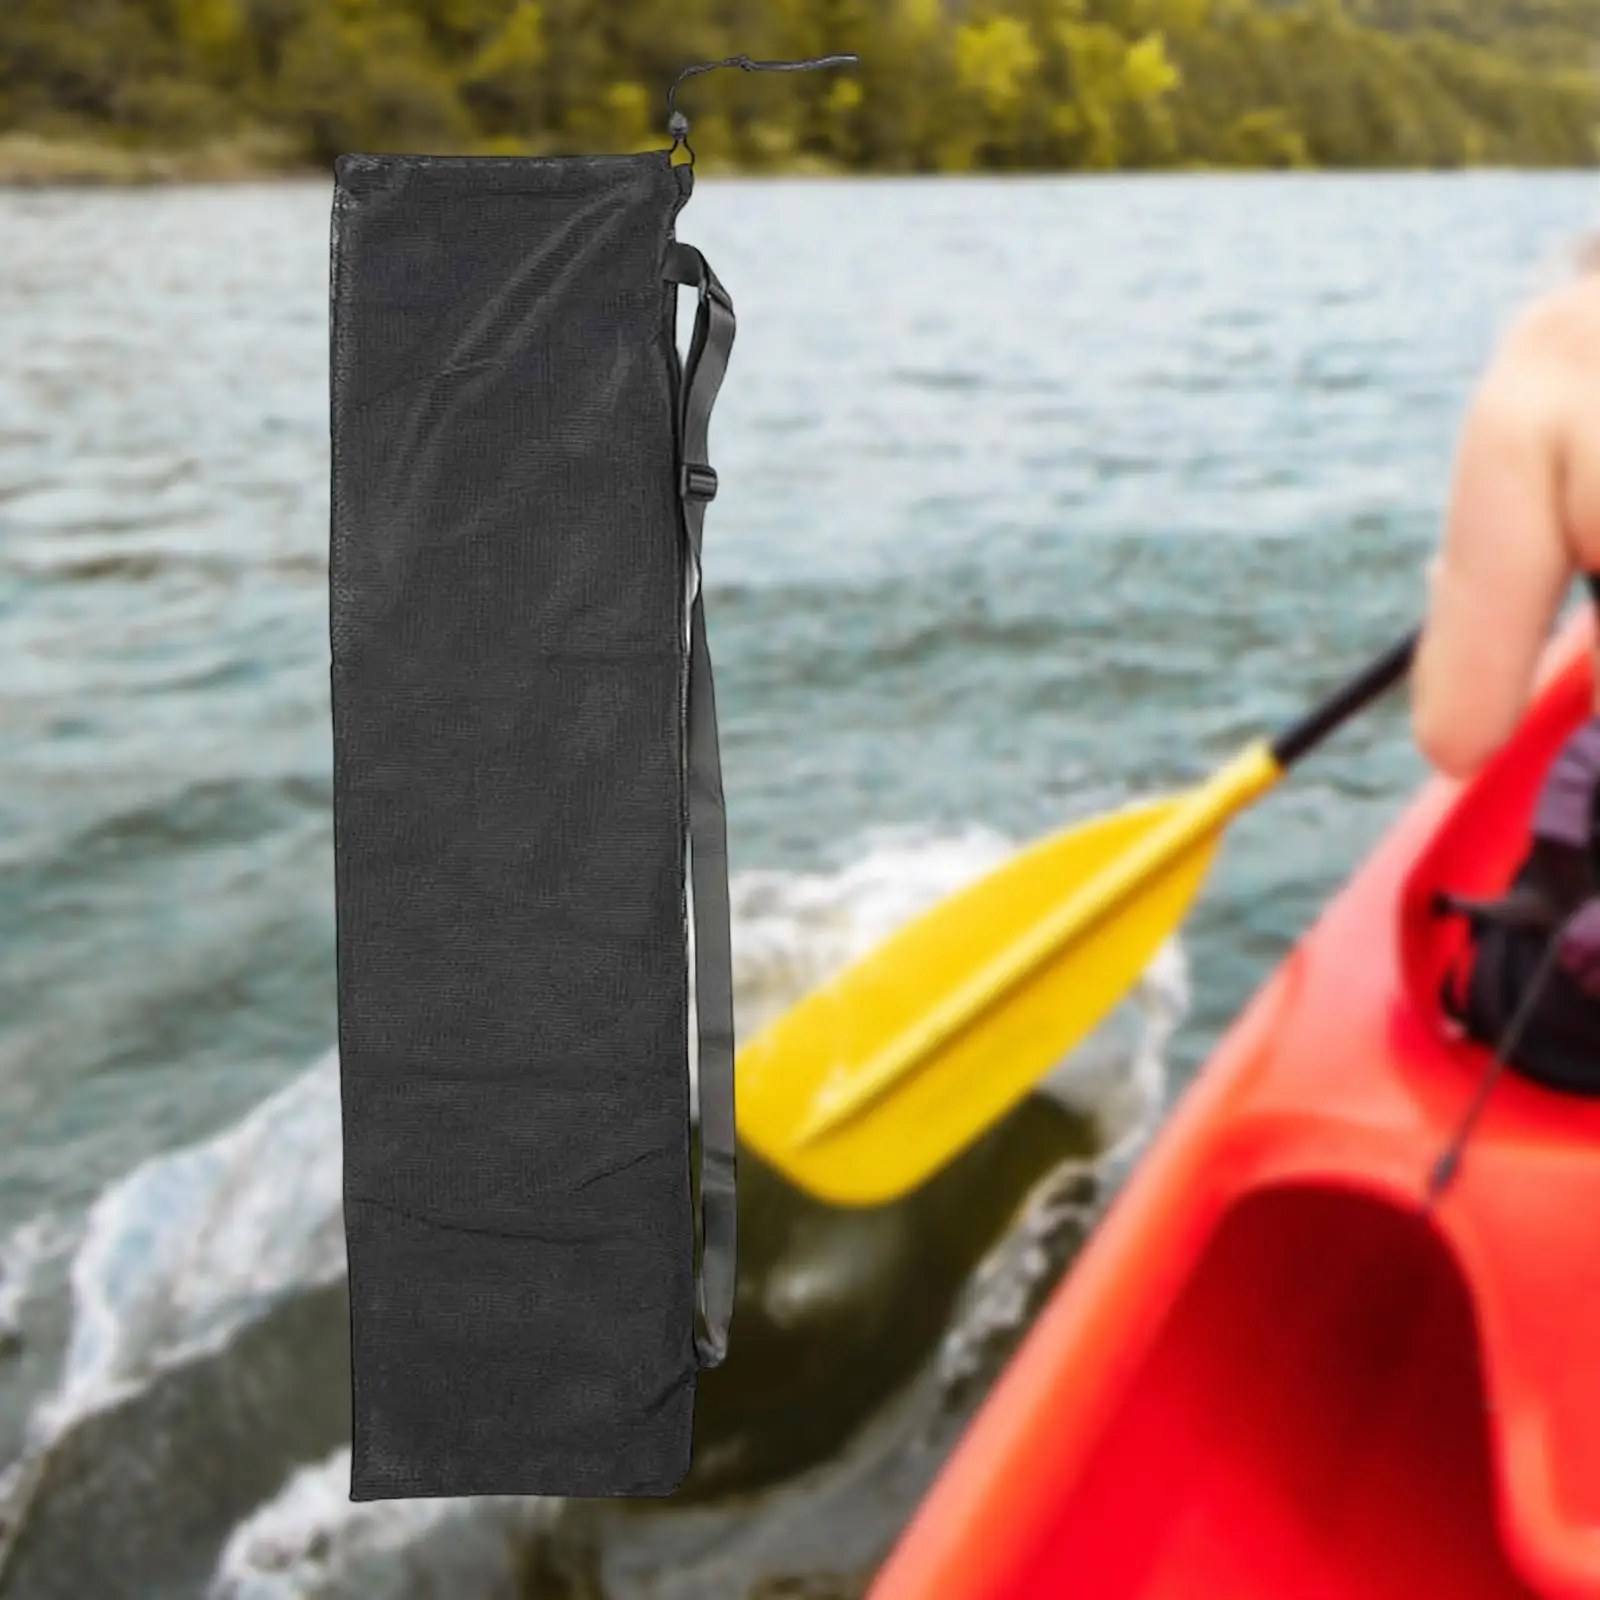 Portable Kayak Paddle Bag Quick Dry Bag Adjustable Shoulder Strap Paddle Cover Case Canoe Pouch Paddle Storage Bag